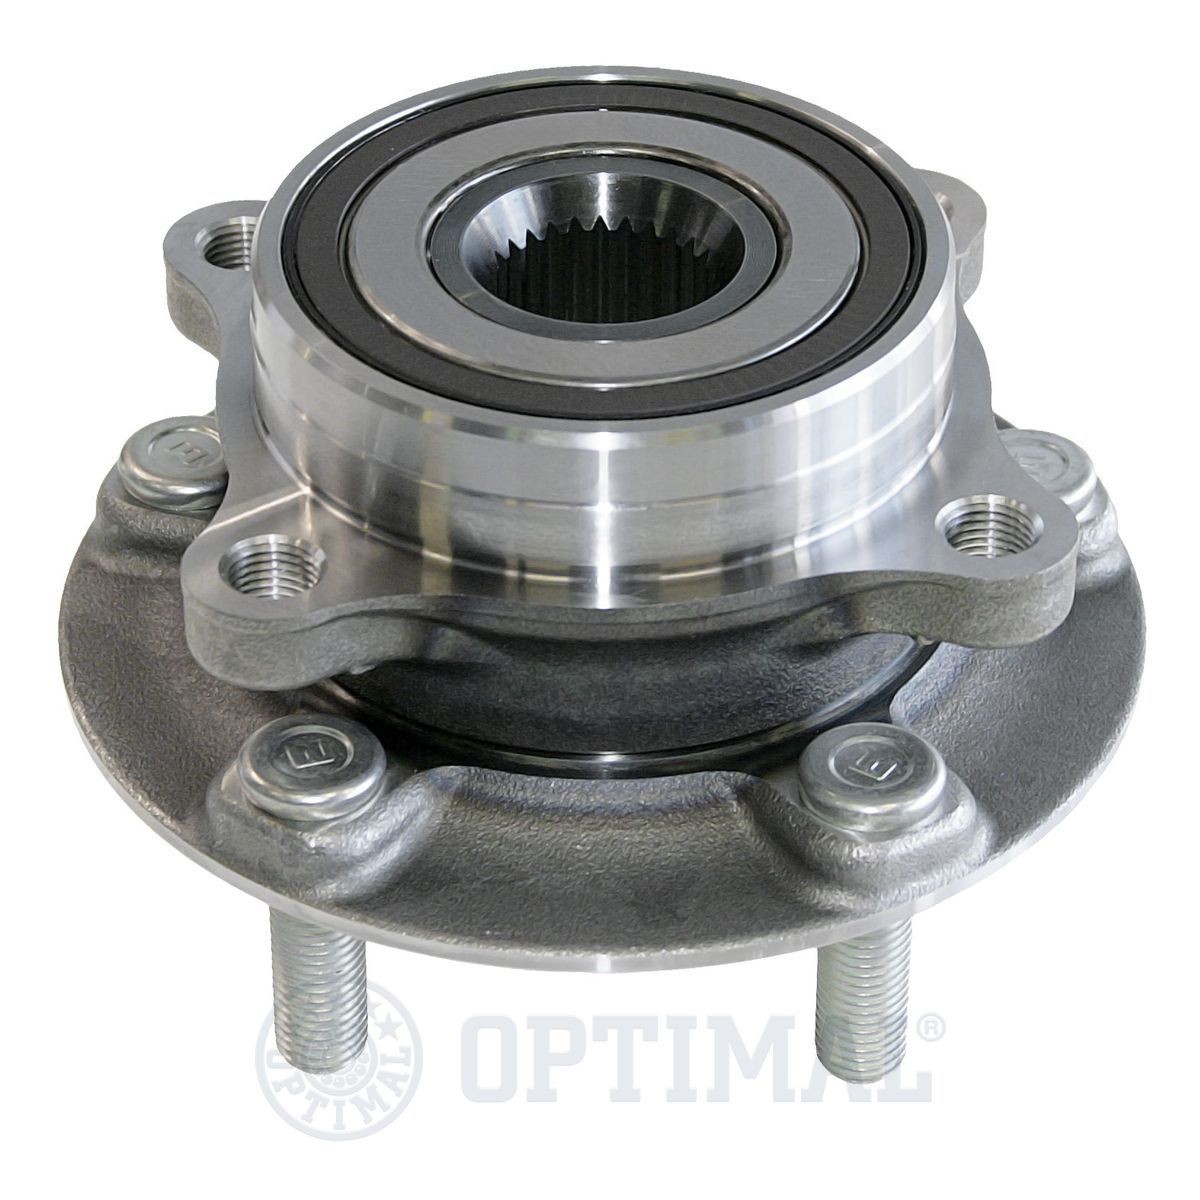 OPTIMAL 951831 Wheel bearing kit with integrated magnetic sensor ring, 139, 87 mm